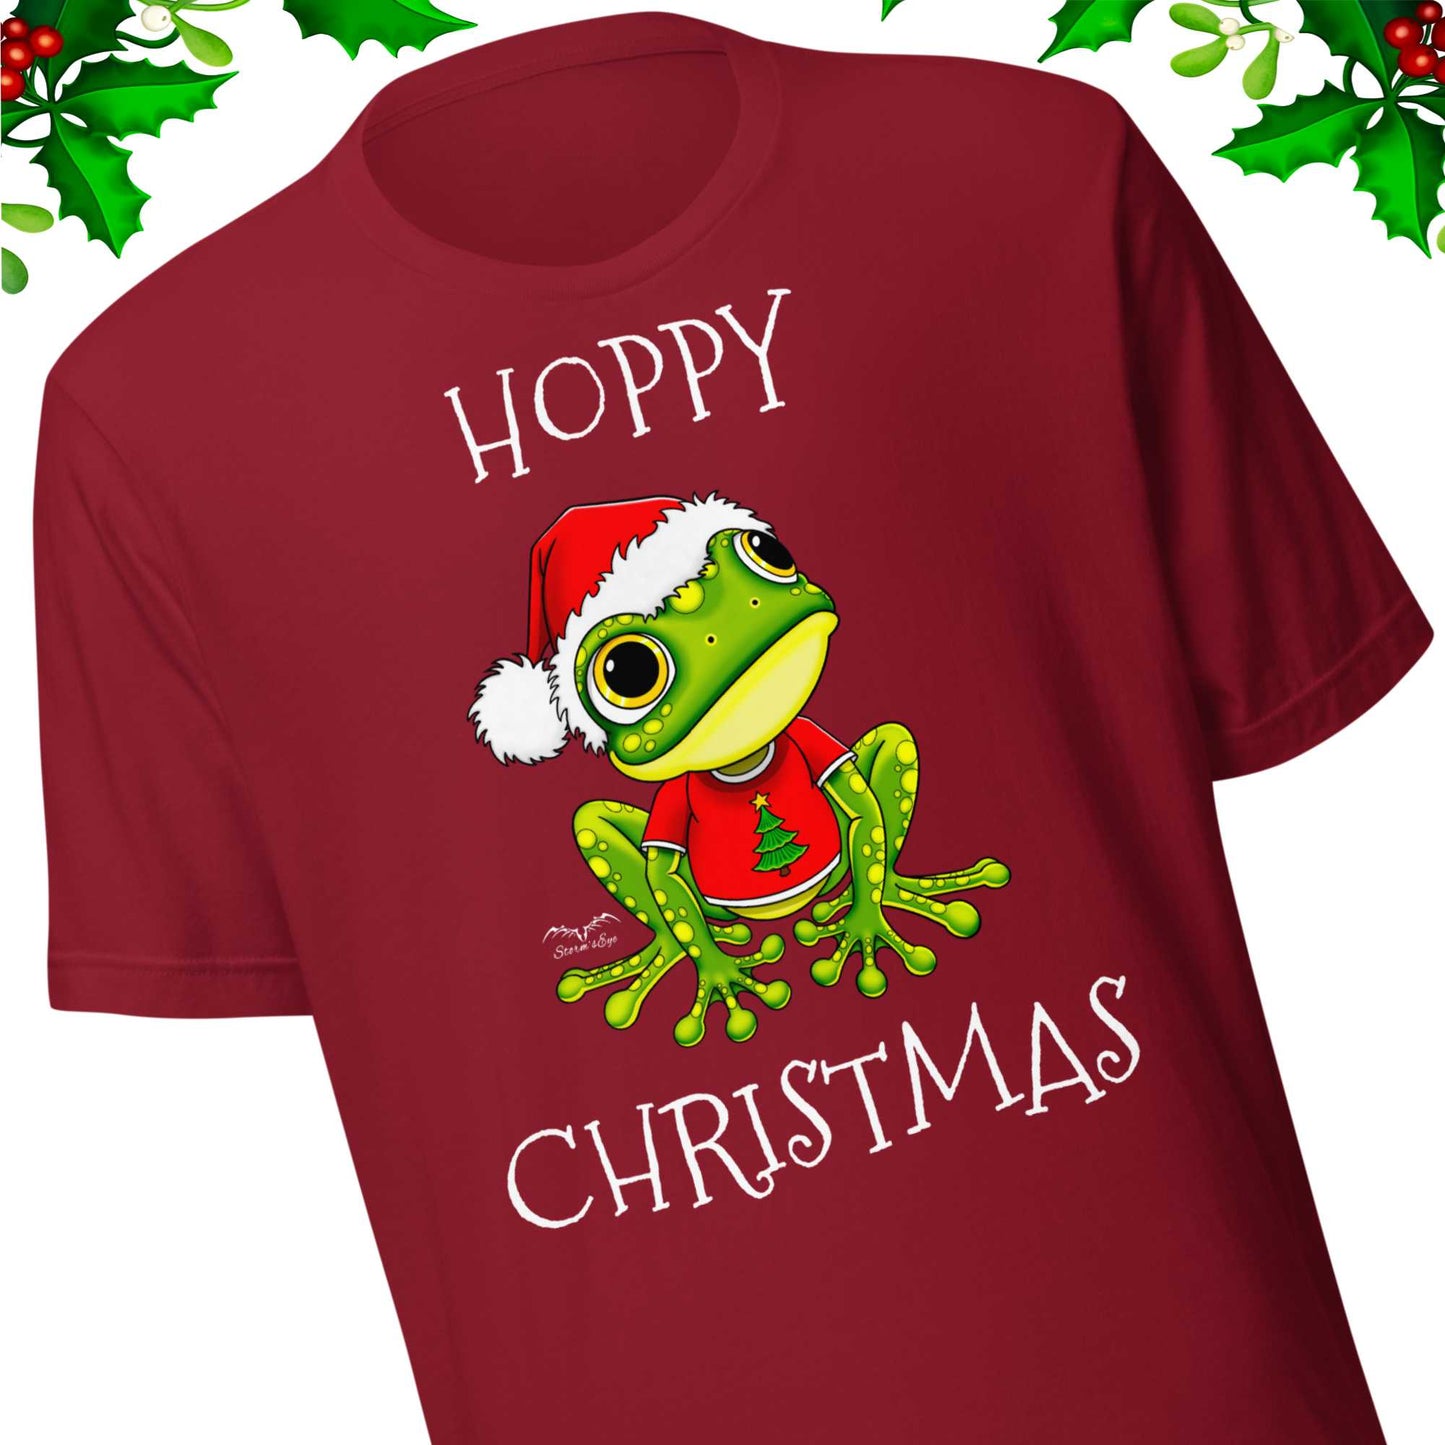 stormseye design hoppy christmas santa frog T shirt, detail view cardinal red